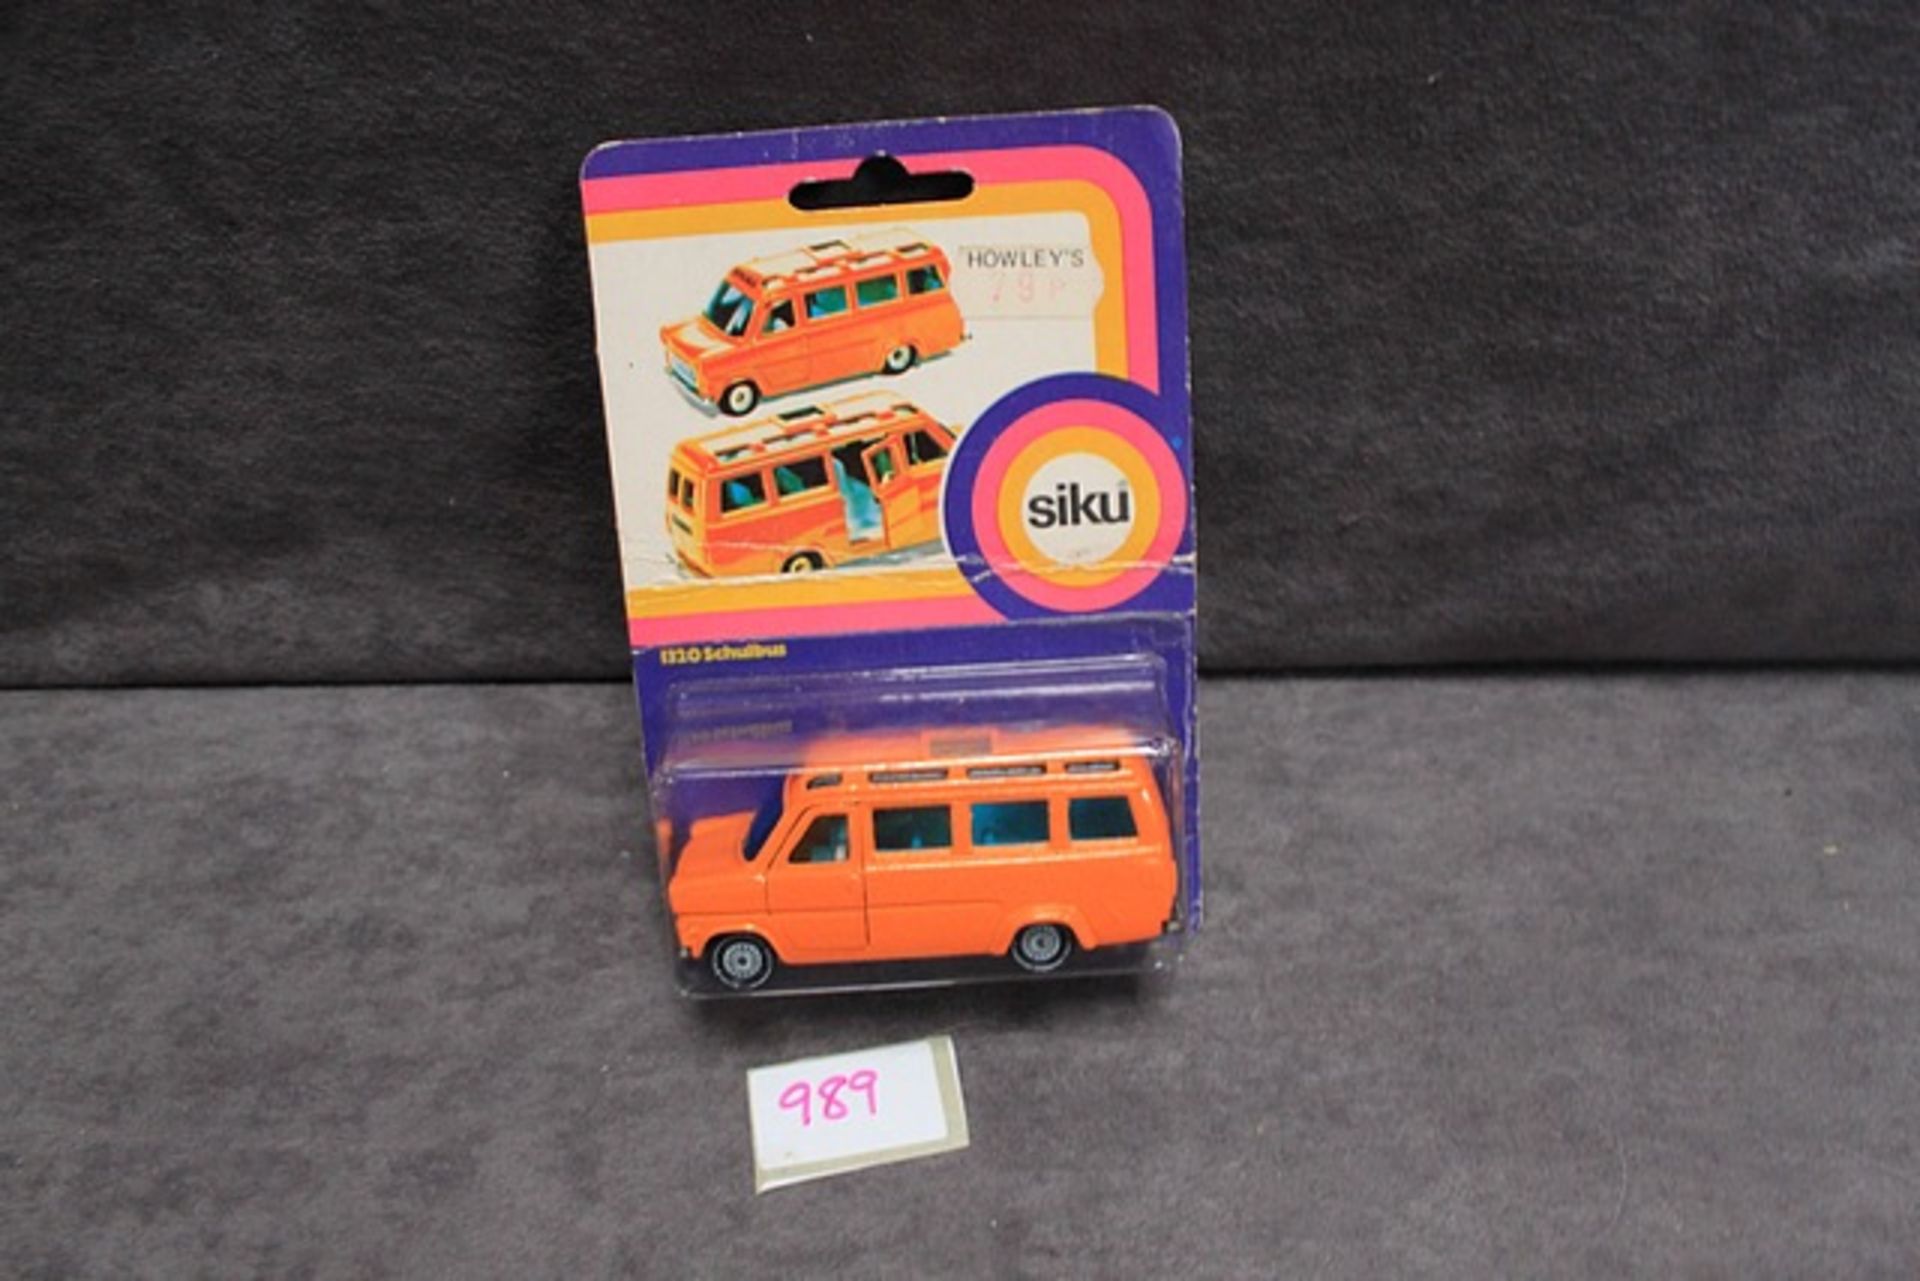 Siku diecast #1320 ford Transit School Bus on original bubble card - Image 2 of 2